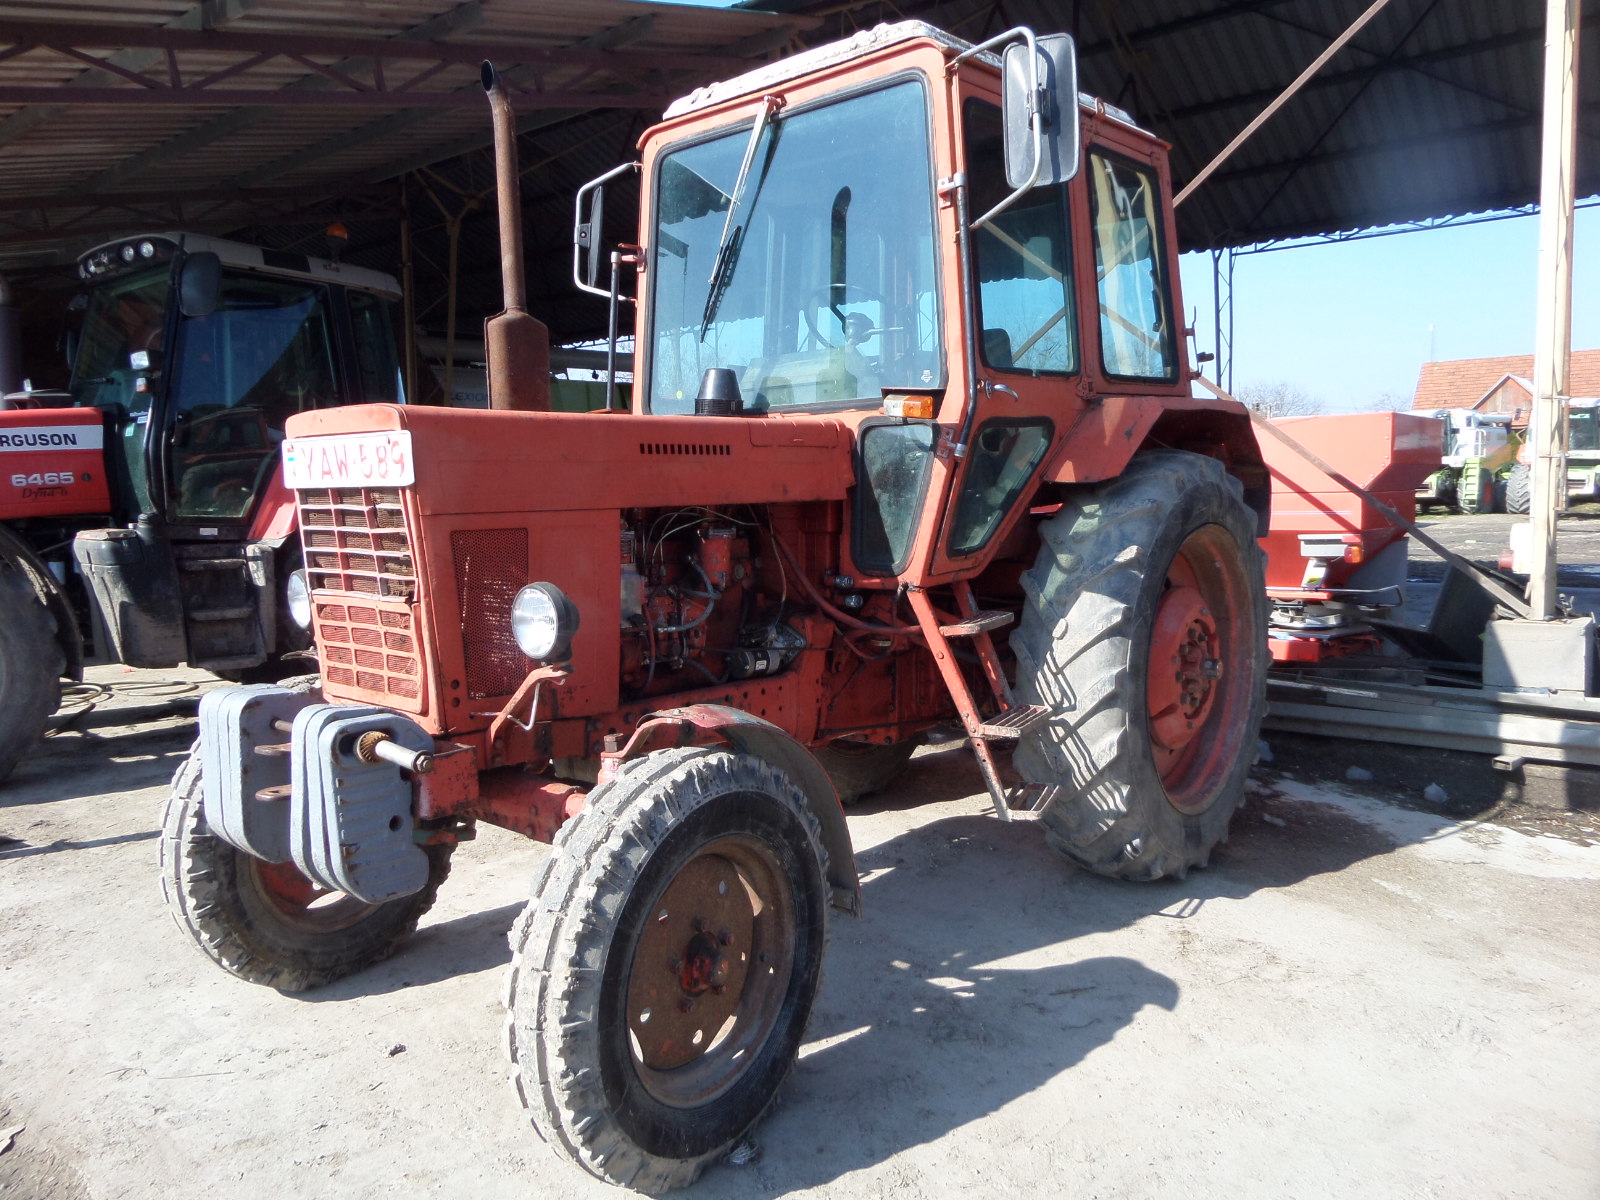 MTZ 80 Traktor